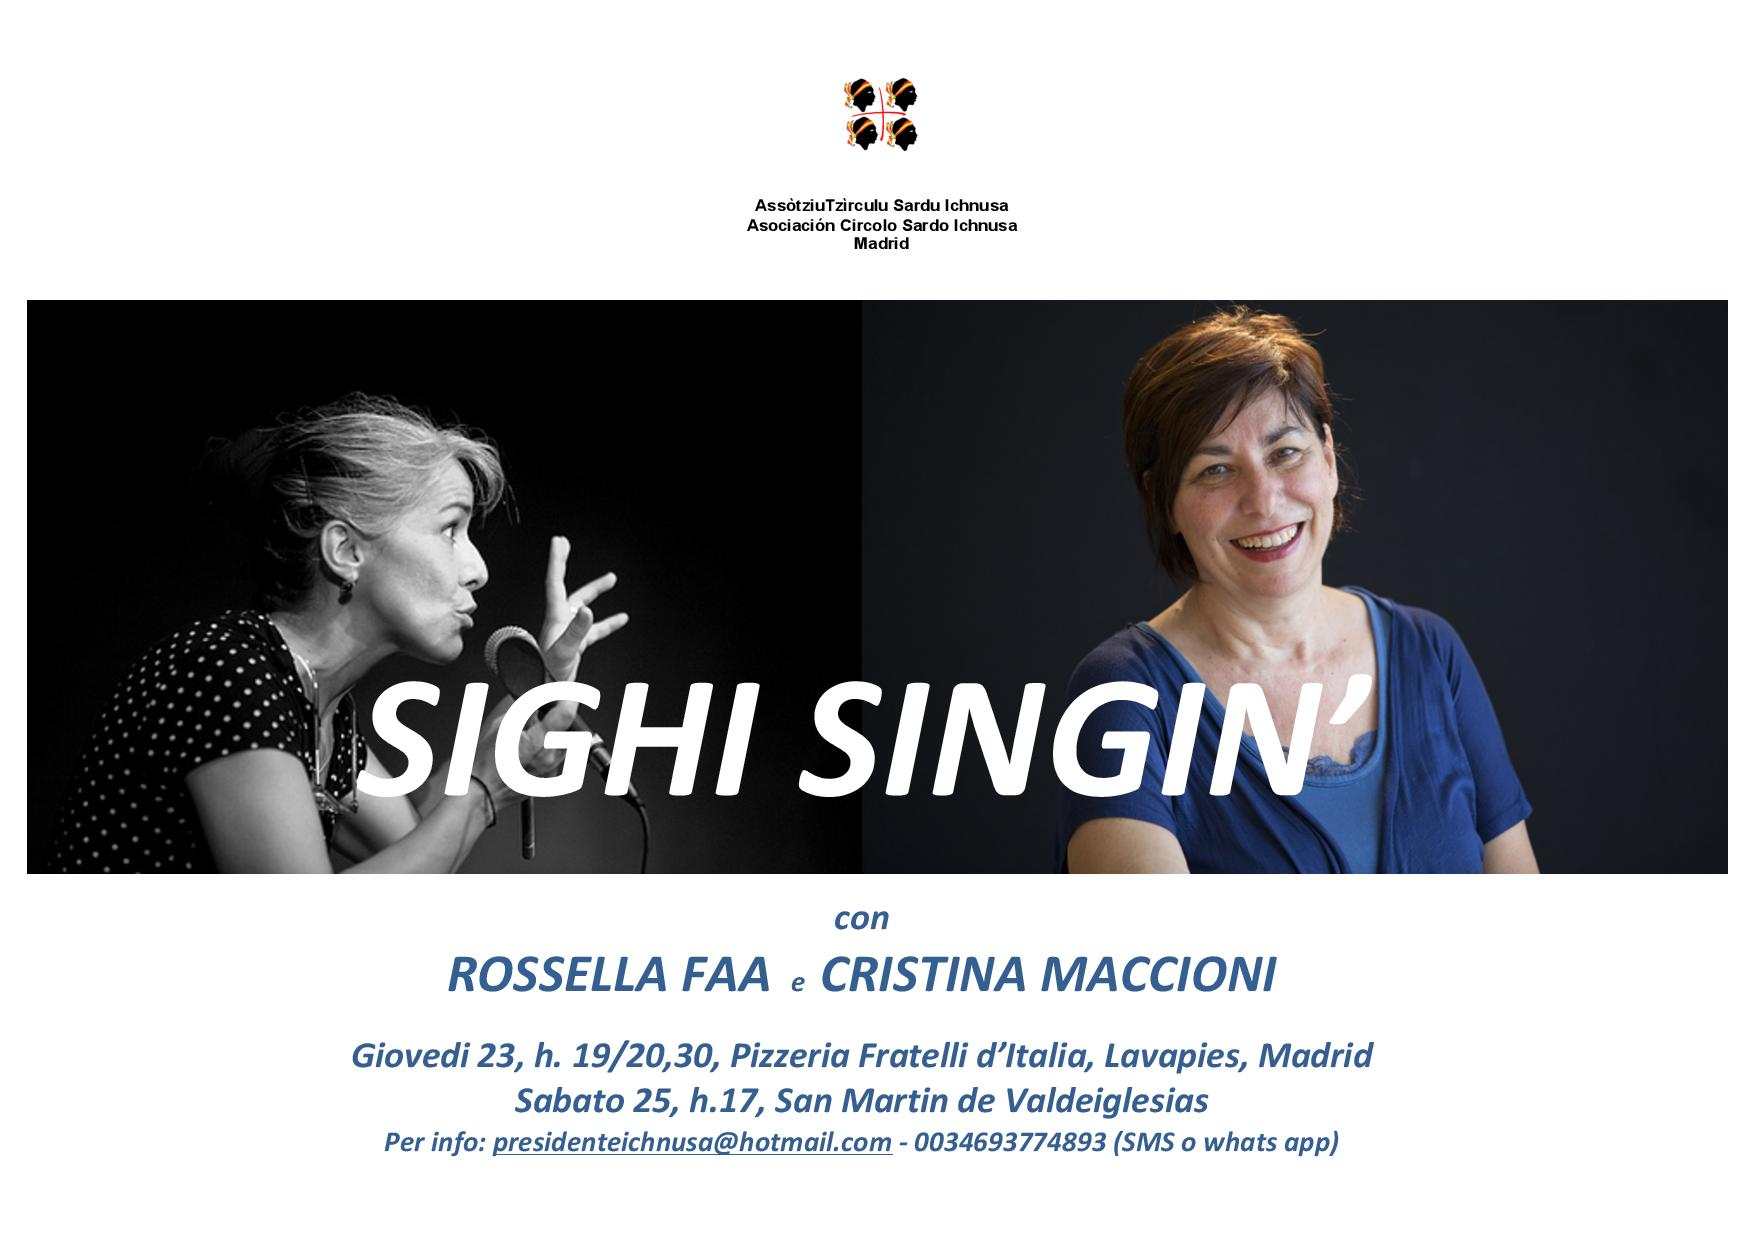 L’Associazione Circolo Sardo Icnusa di Madrid presenta “SIGHI SINGIN”